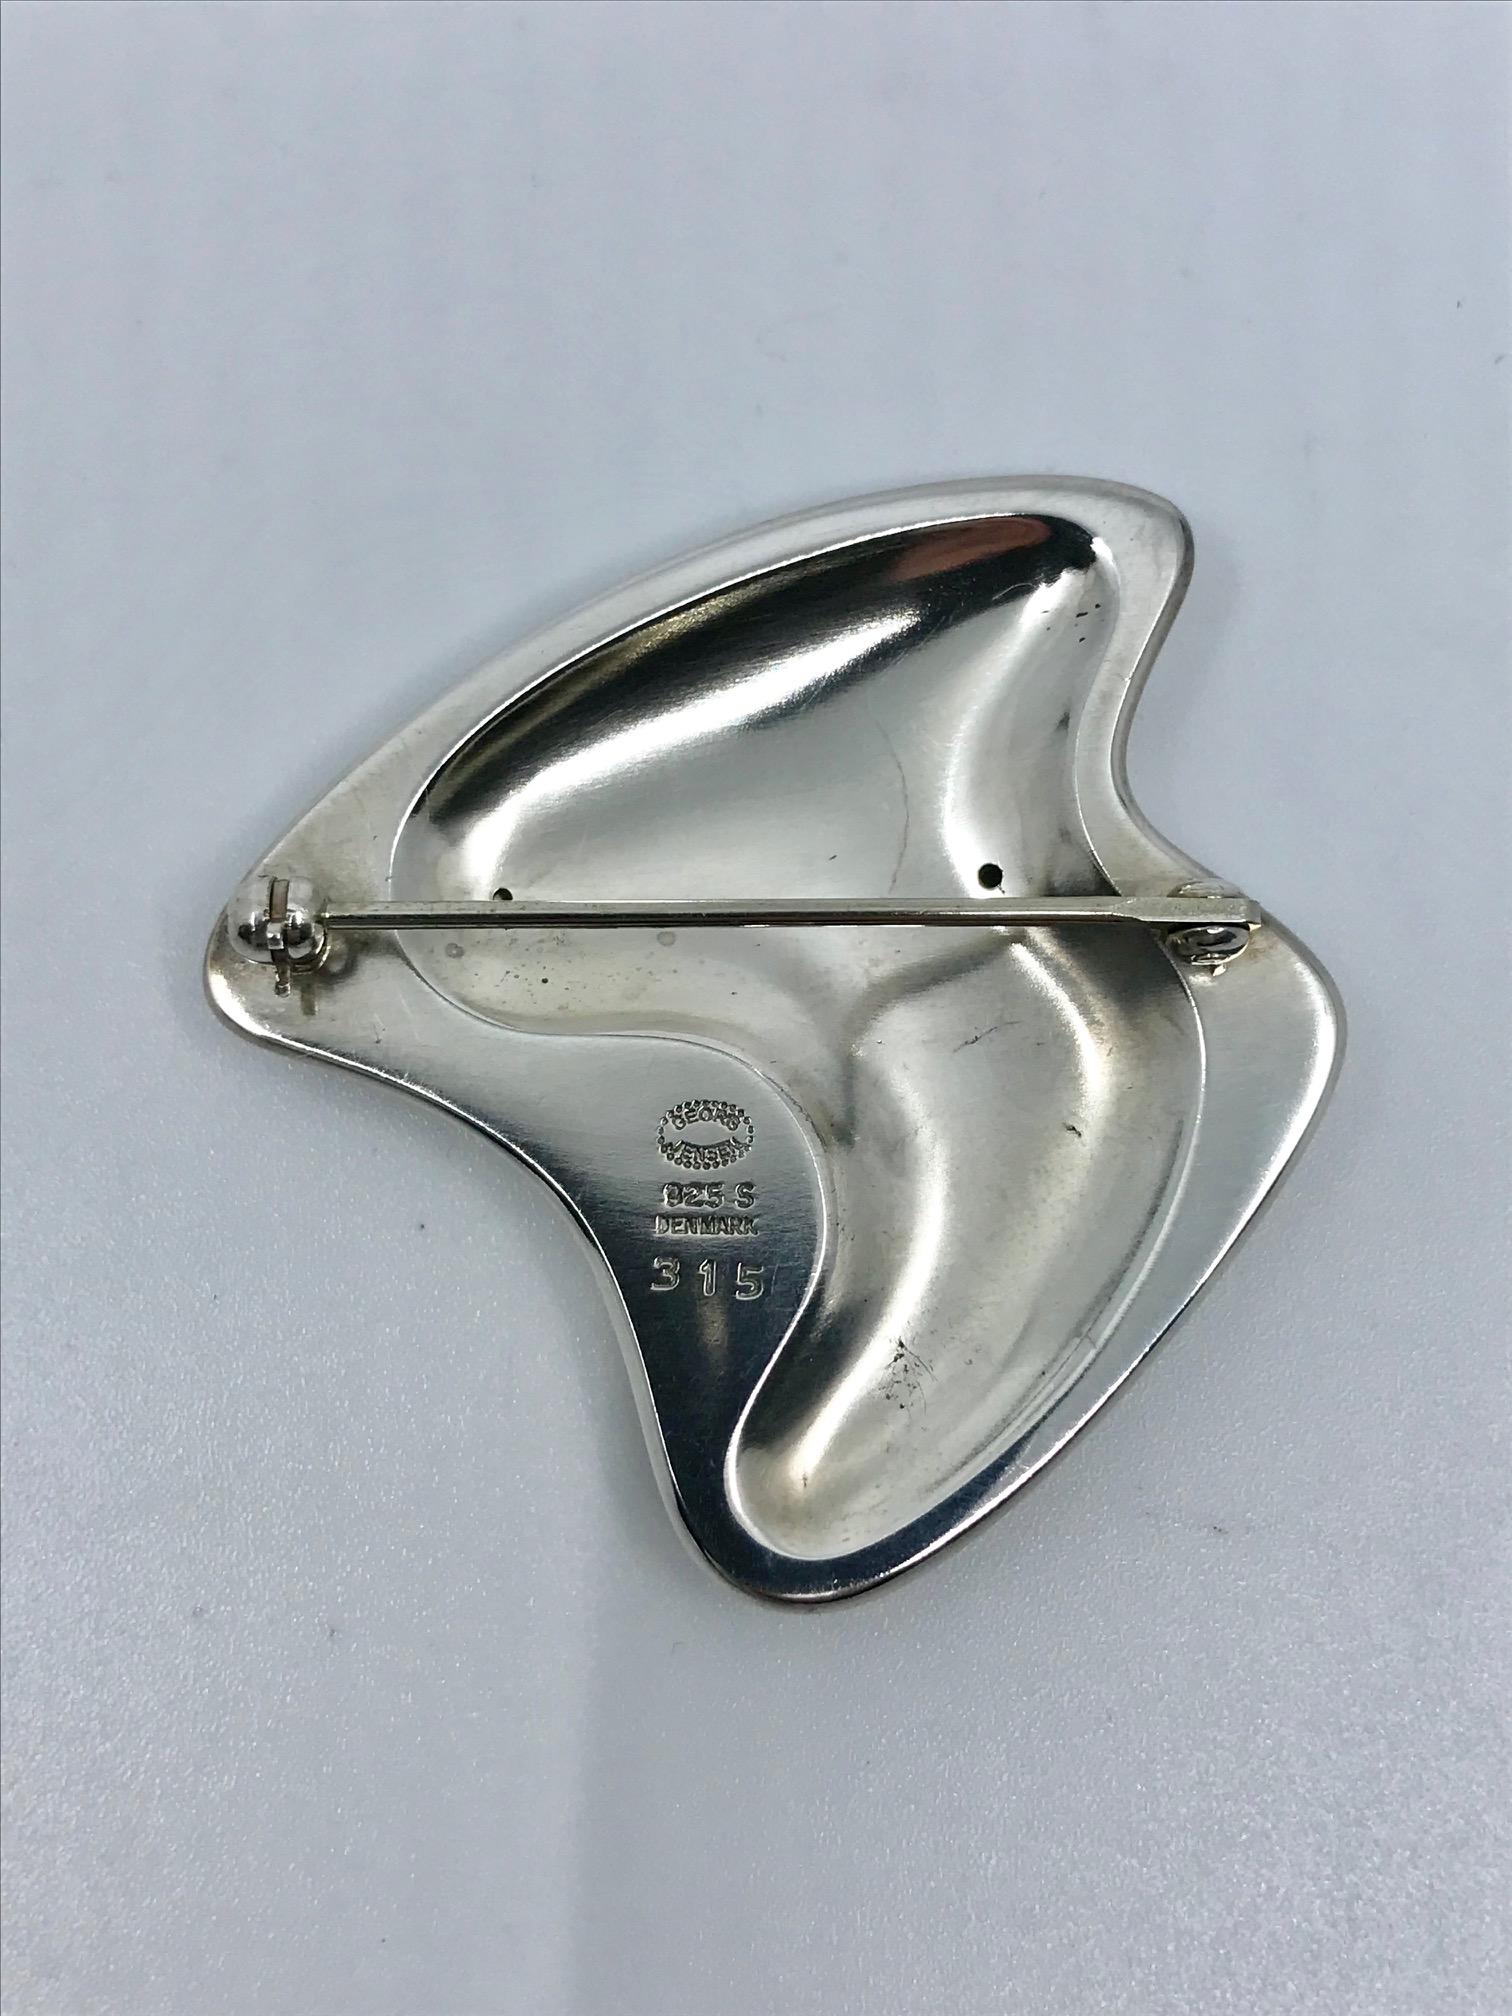 Modern sterling silver Georg Jensen brooch with black enamel, design #315 by Henning Koppel from circa 1954.
Measures 1 3/4″ x 1 3/4″ (4.3cm x 4.3cm).
Post 1944 Georg Jensen hallmark.
The enamel is undamaged.